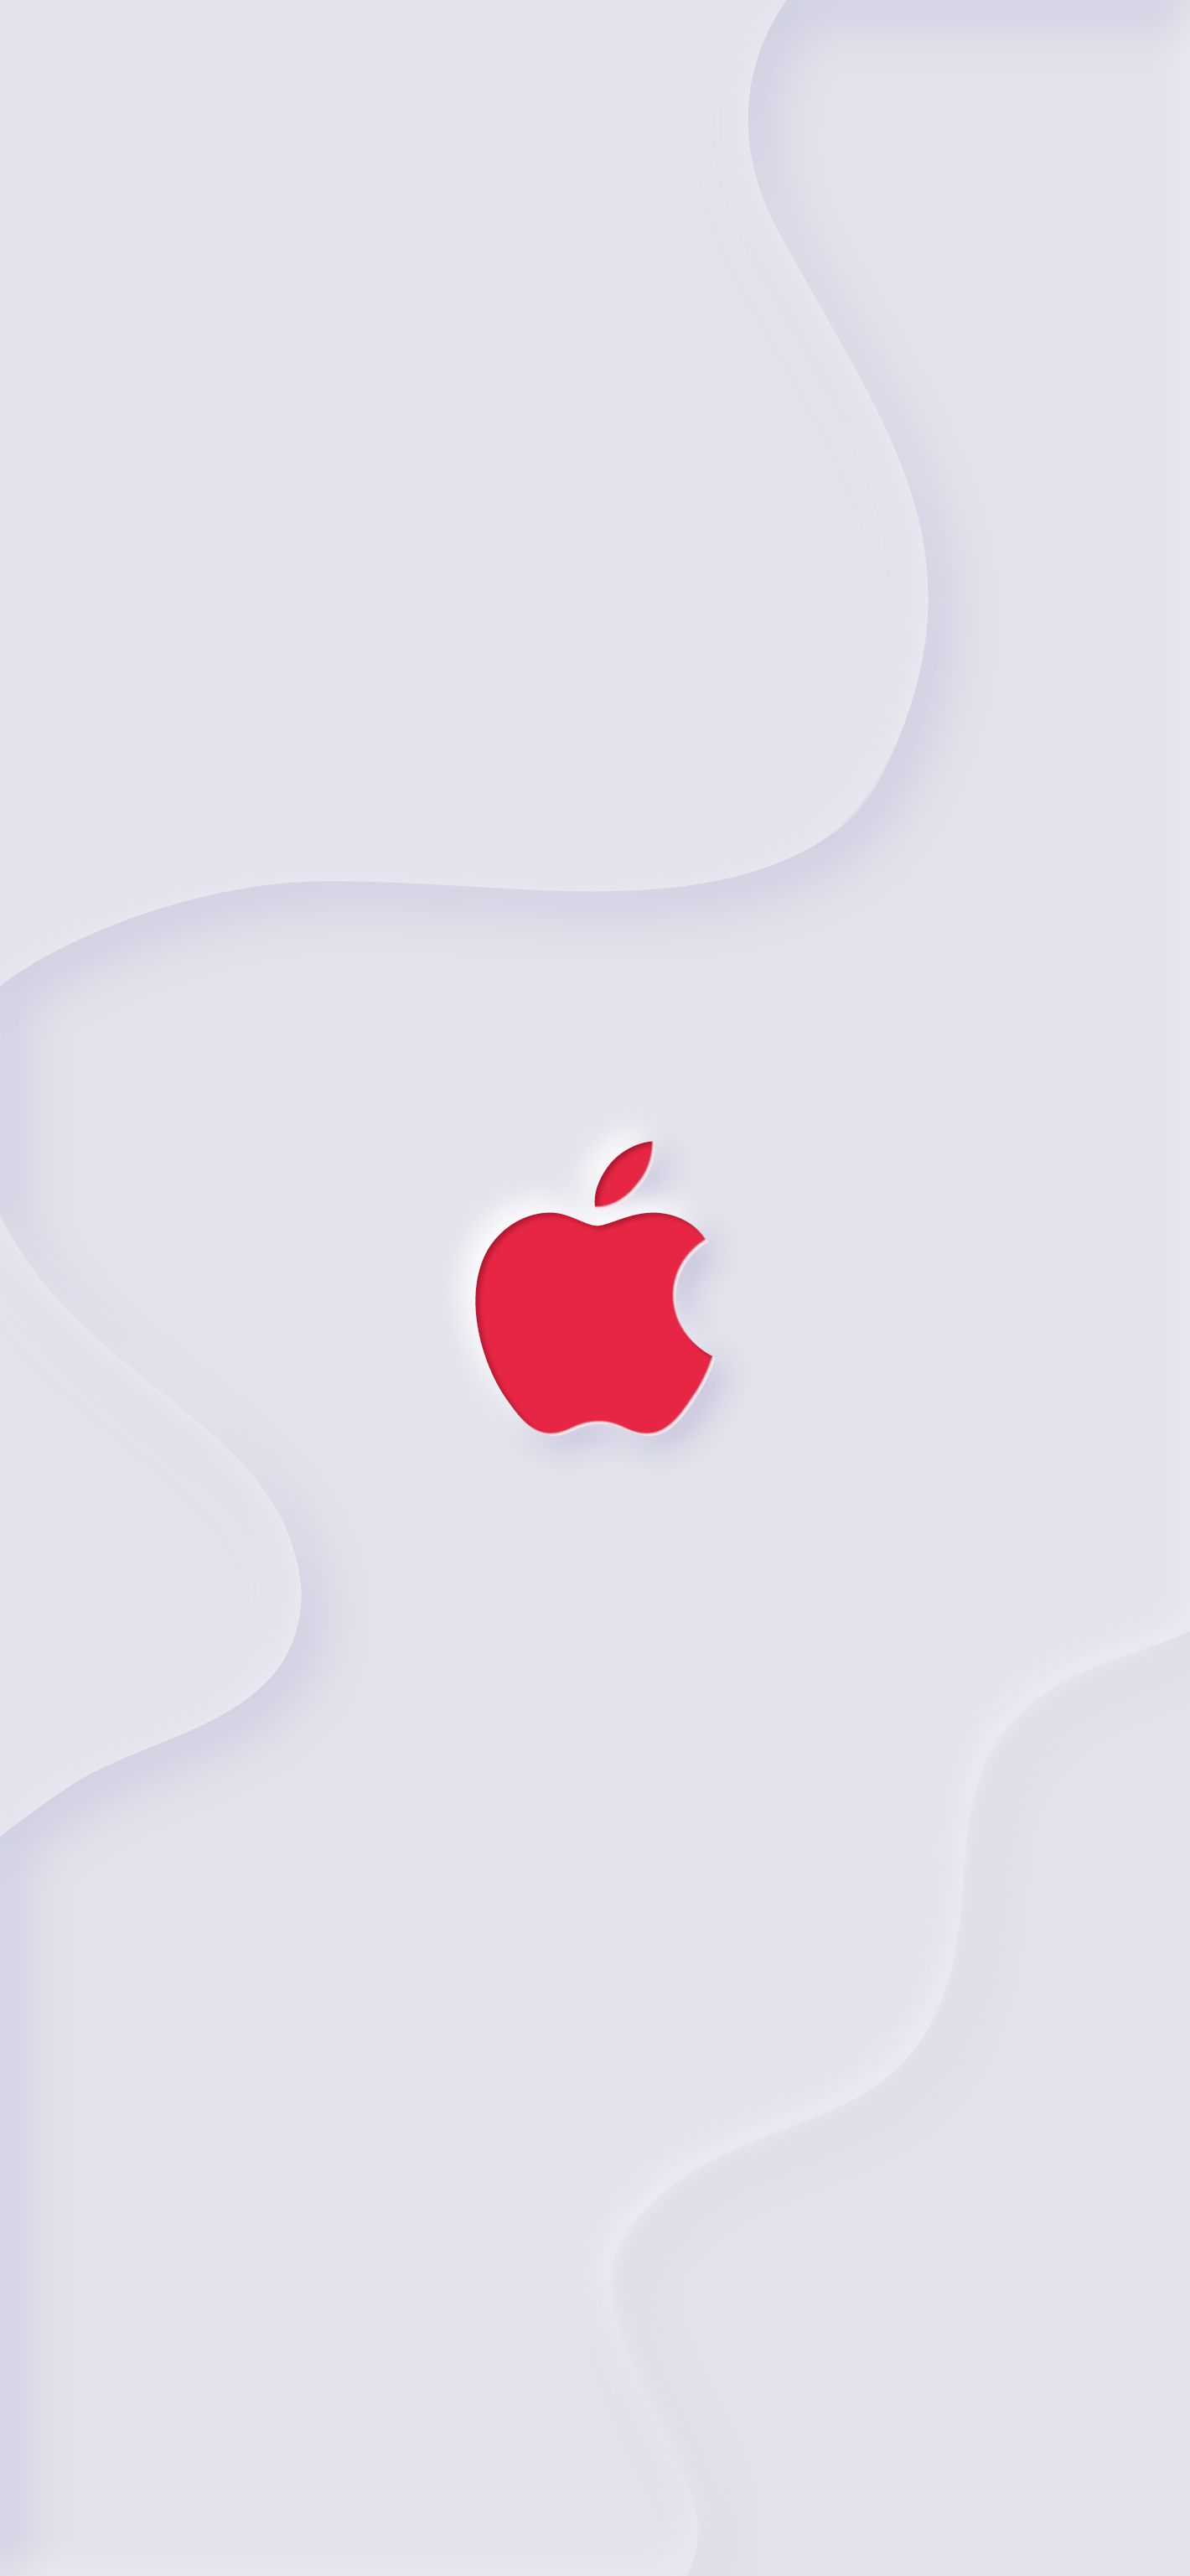 neumorphism iphone wallpaper ispazio idownloadblog apple logo